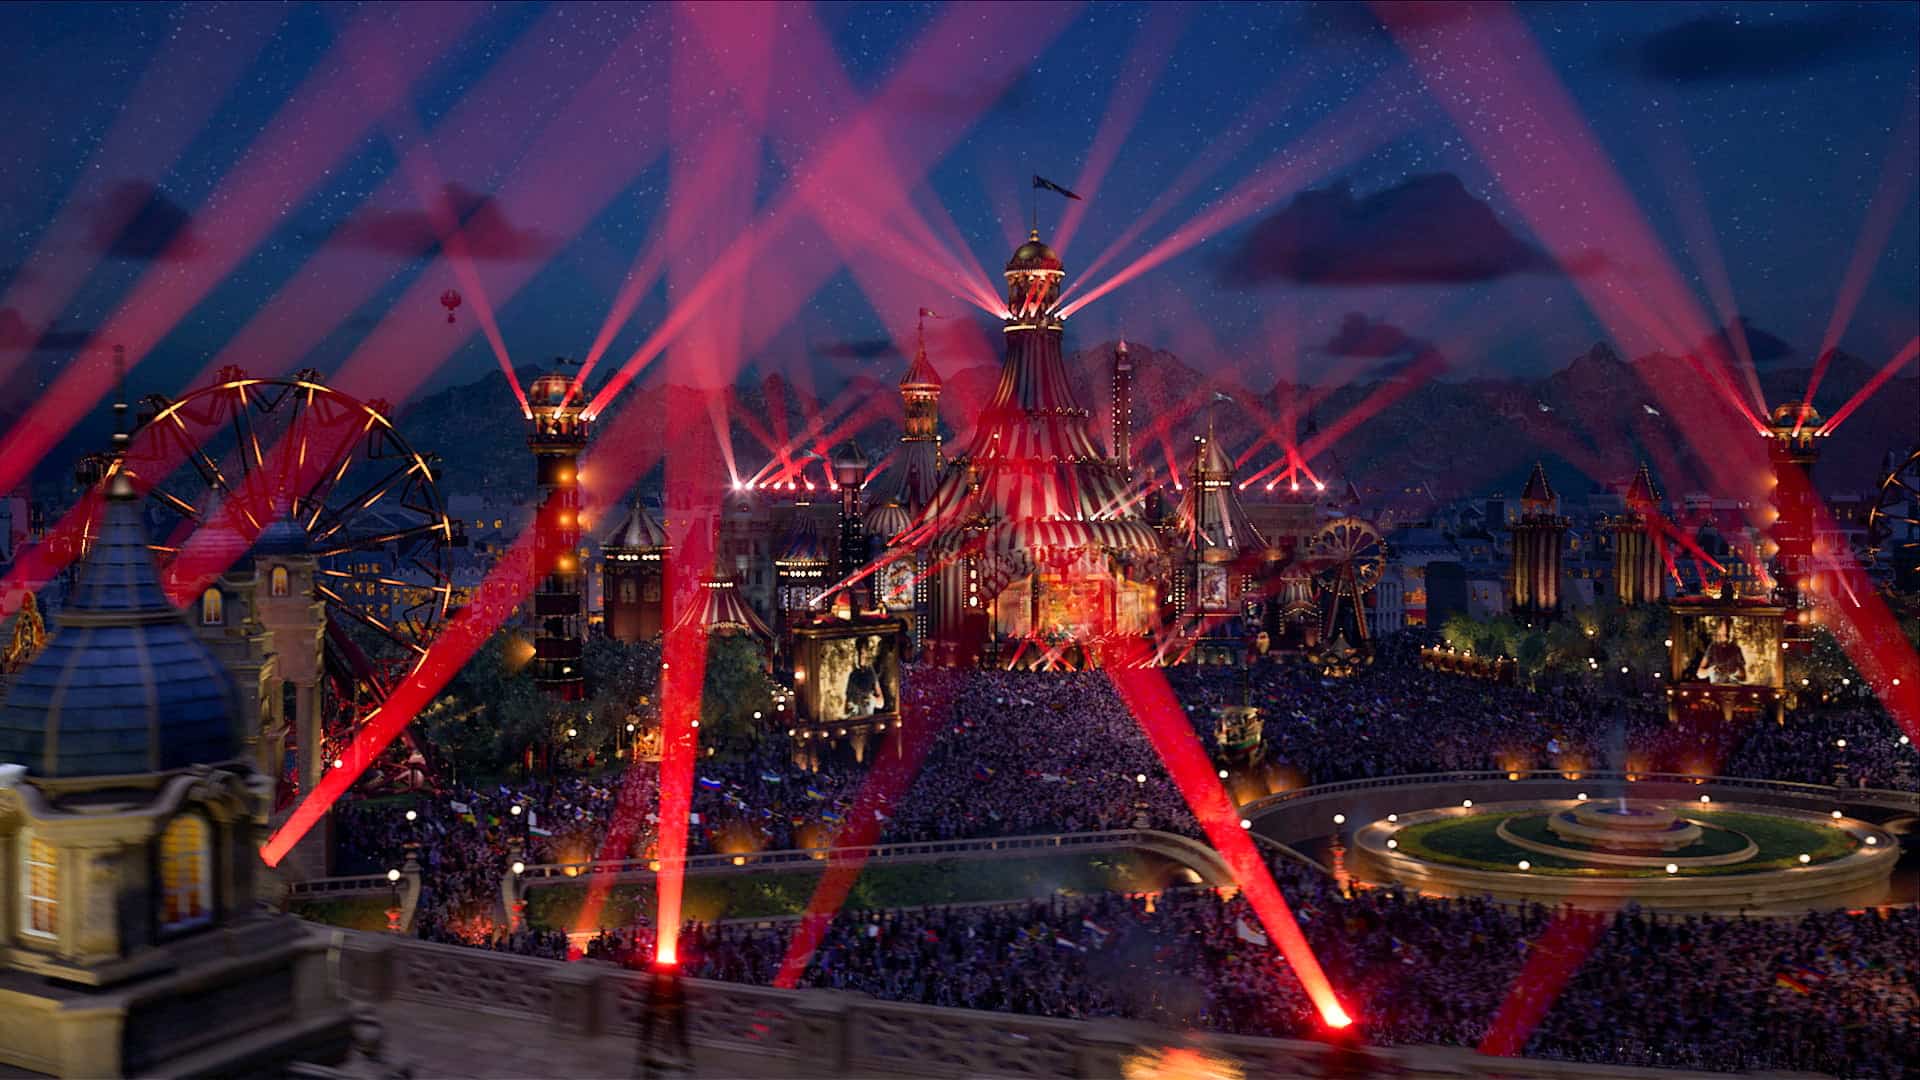 Vini Vici amazes at Tomorrowland Around The World